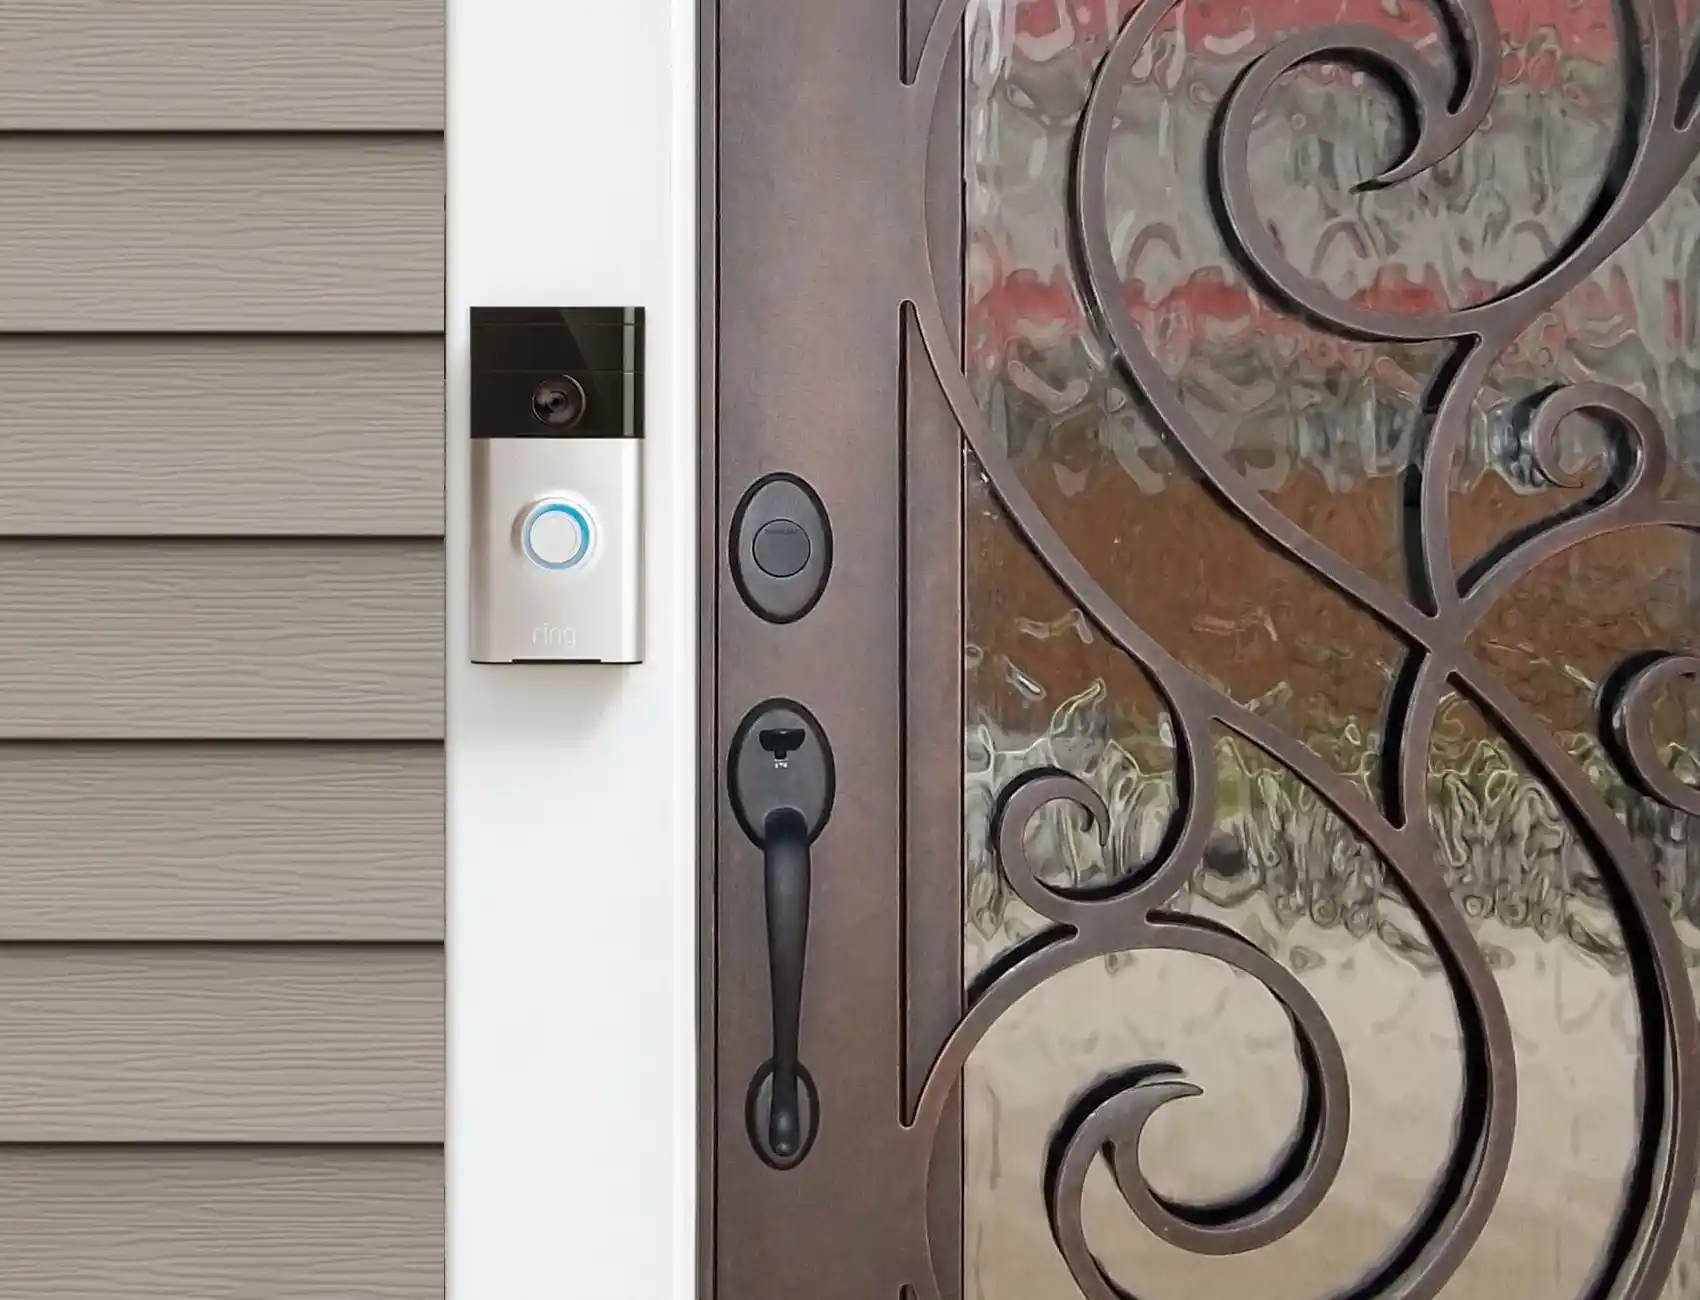 Ring Doorbell, iron & glass front door with swirls, tan siding 1.0